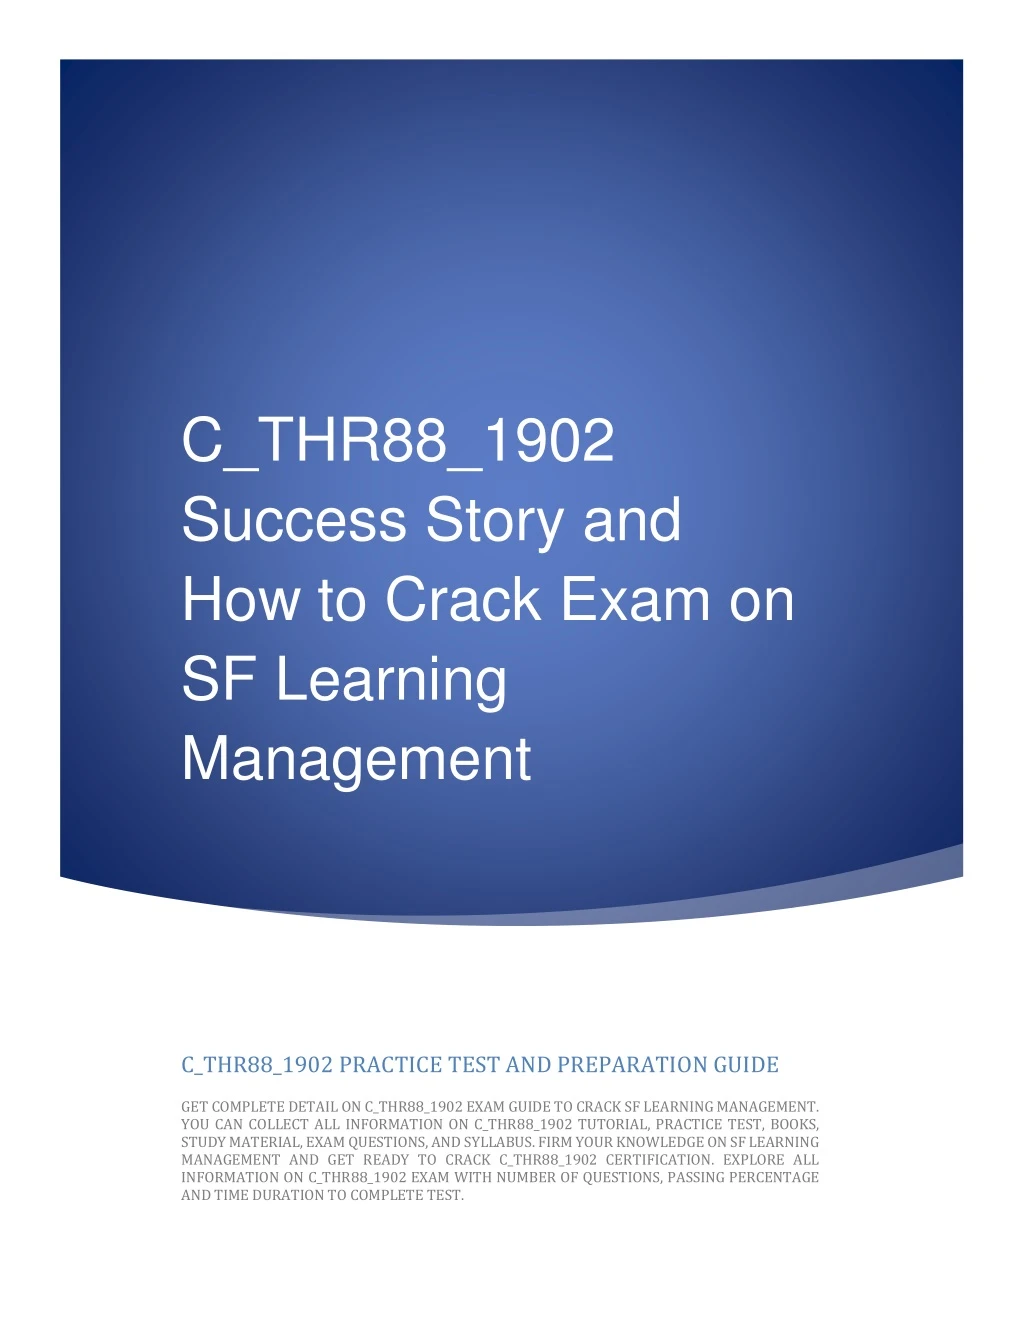 c thr88 1902 success story and how to crack exam